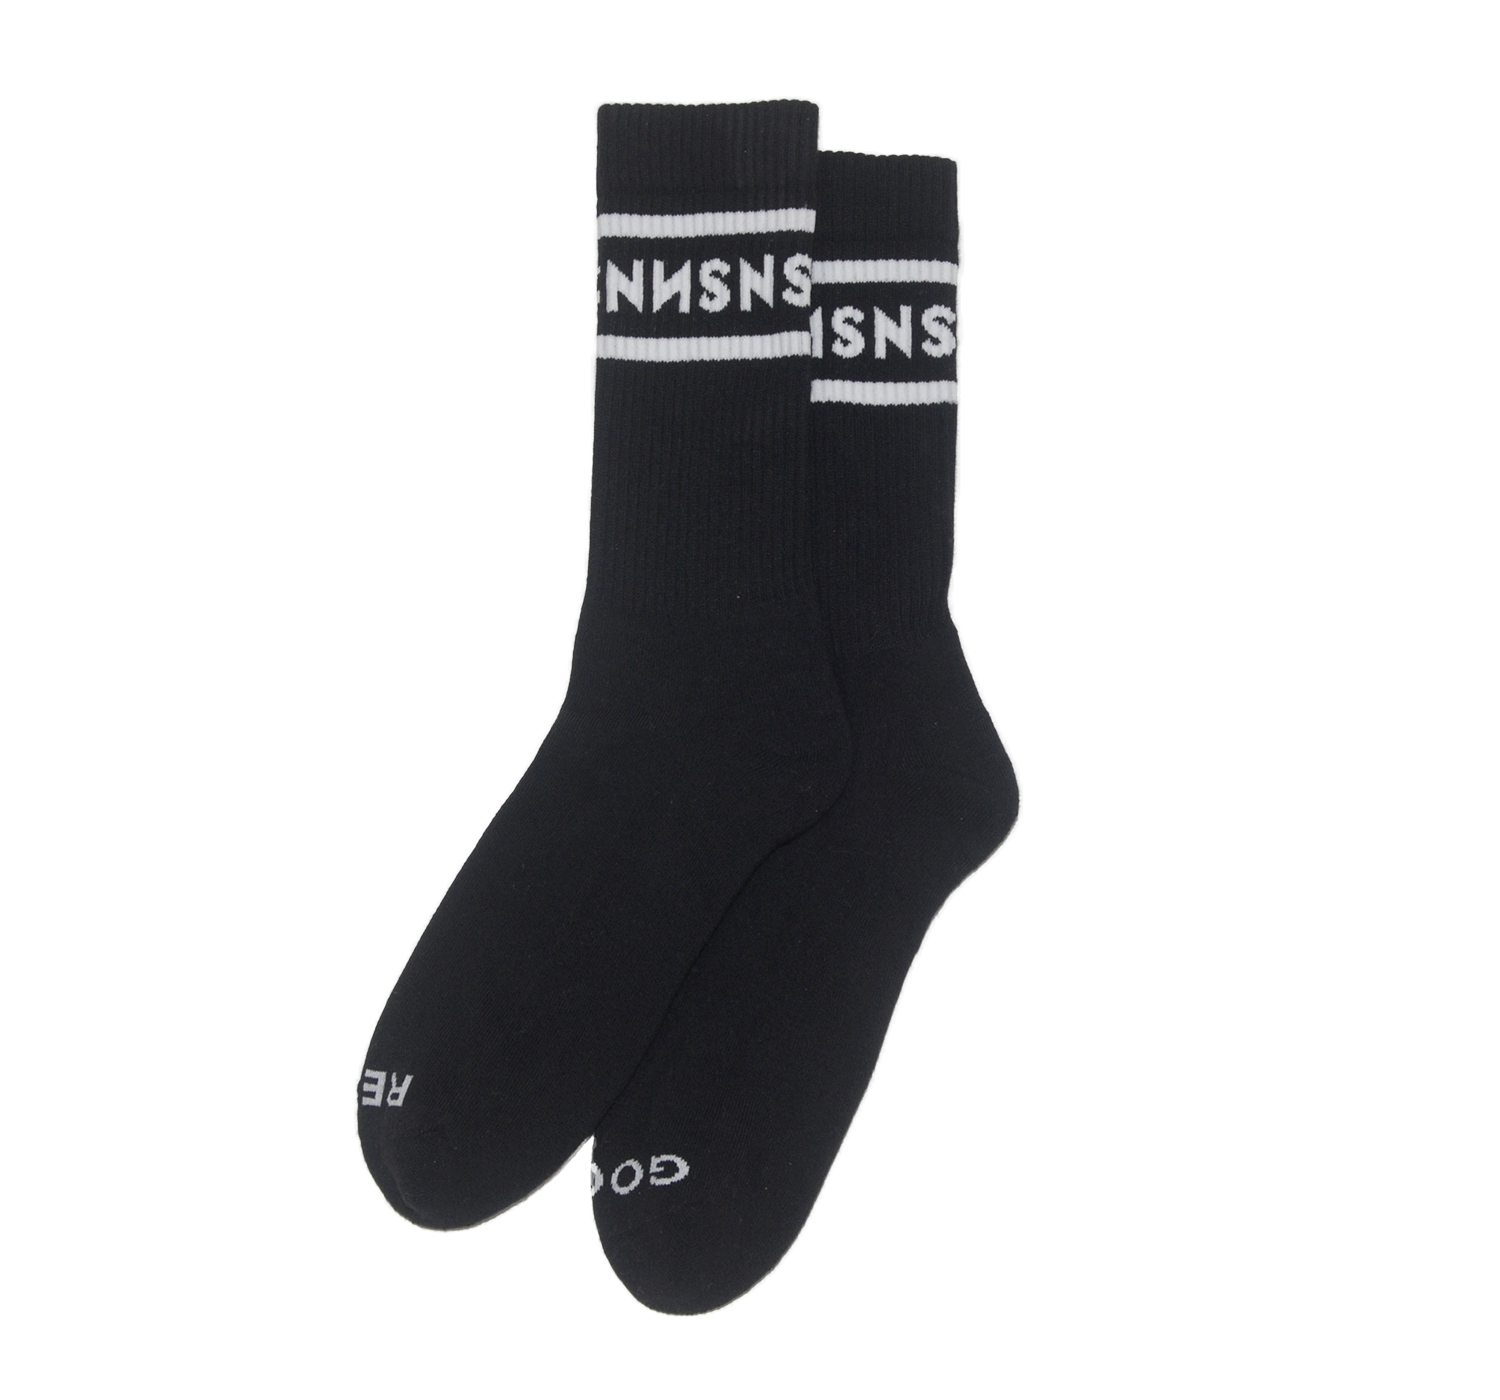 Socks – NNSNS